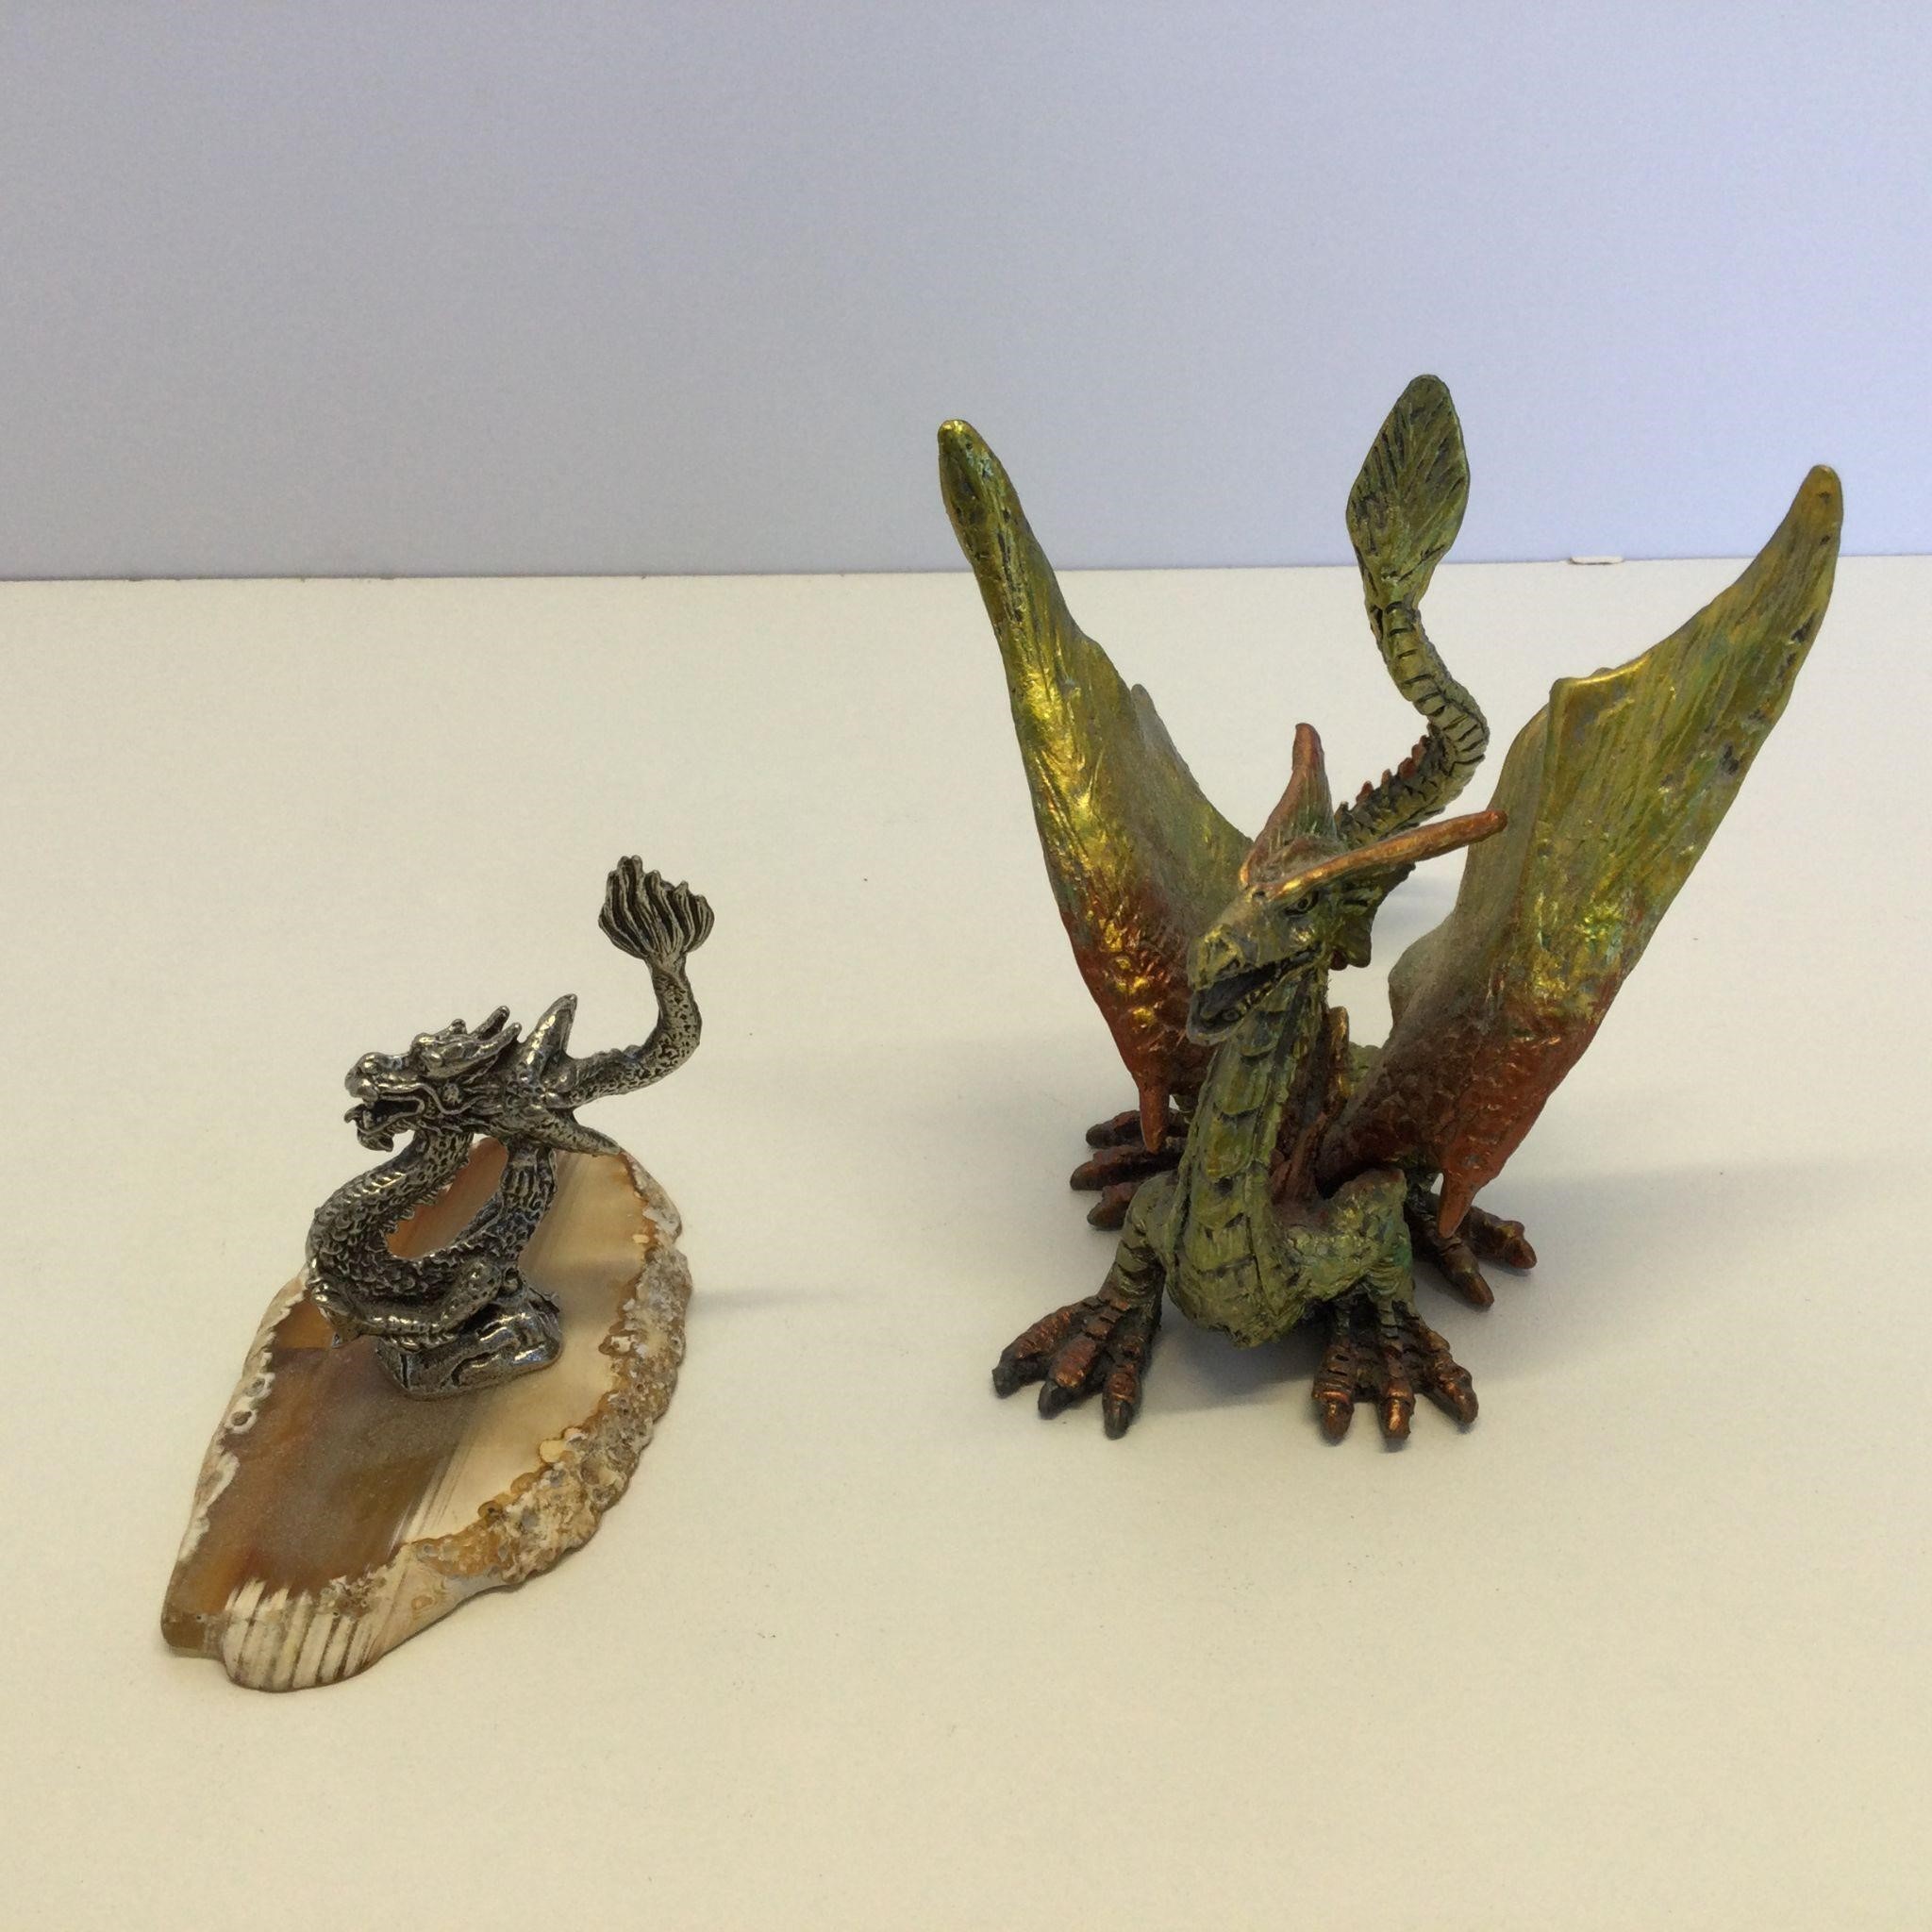 2 Miniature Metal Dragons